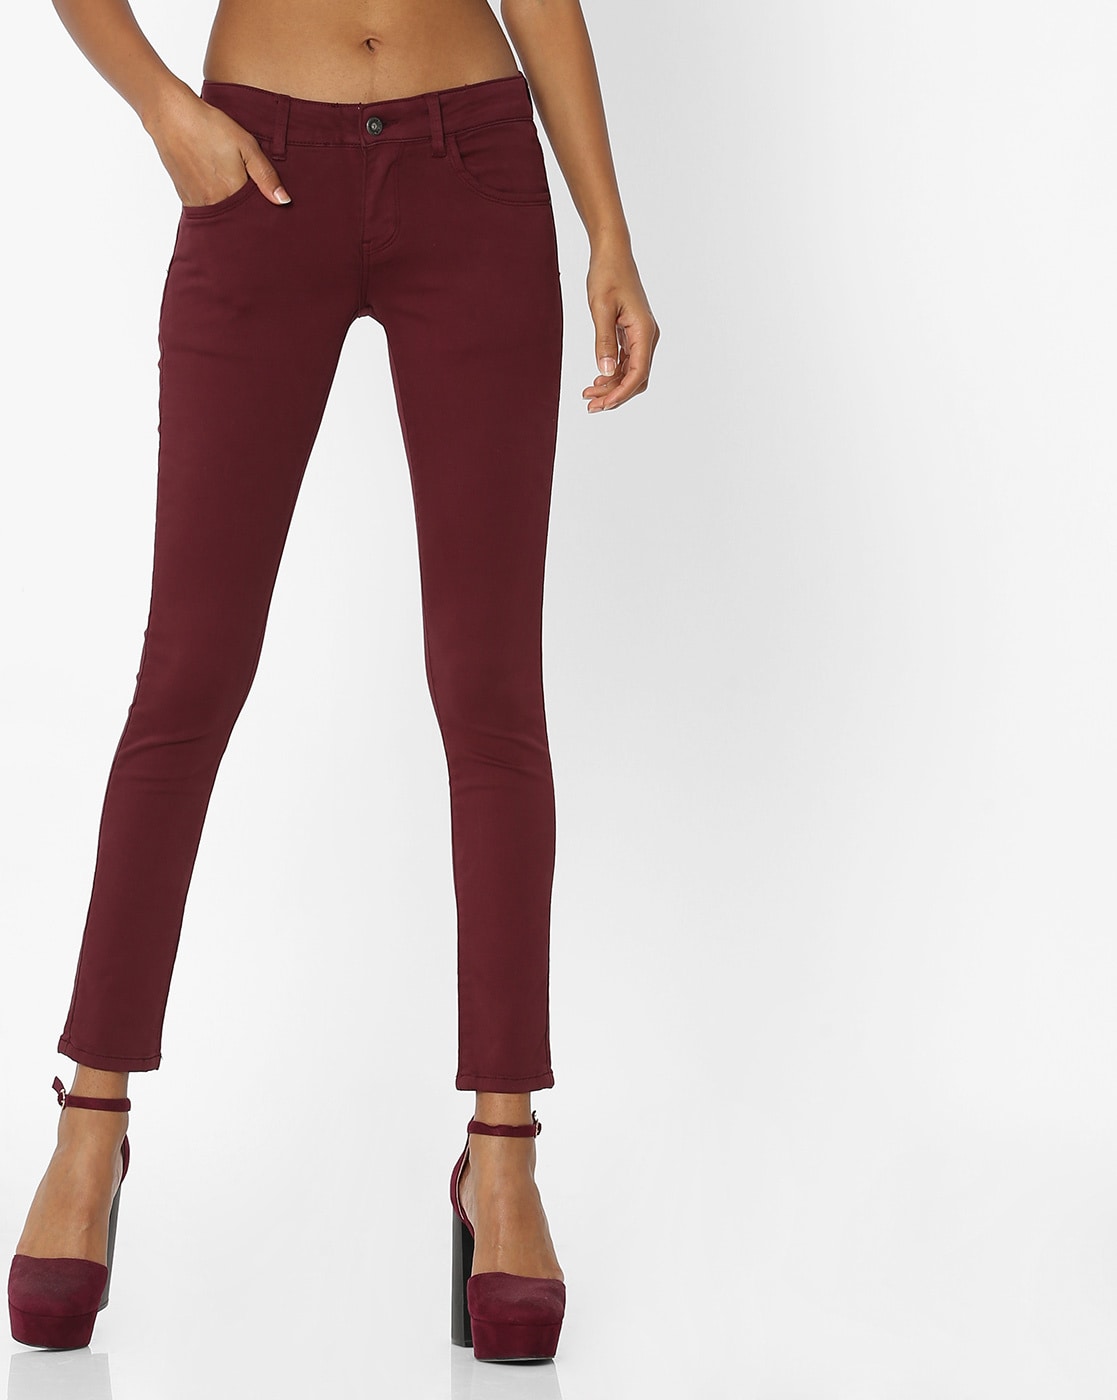 Buy Burgundy Trousers  Pants for Women by Deal Jeans Online  Ajiocom